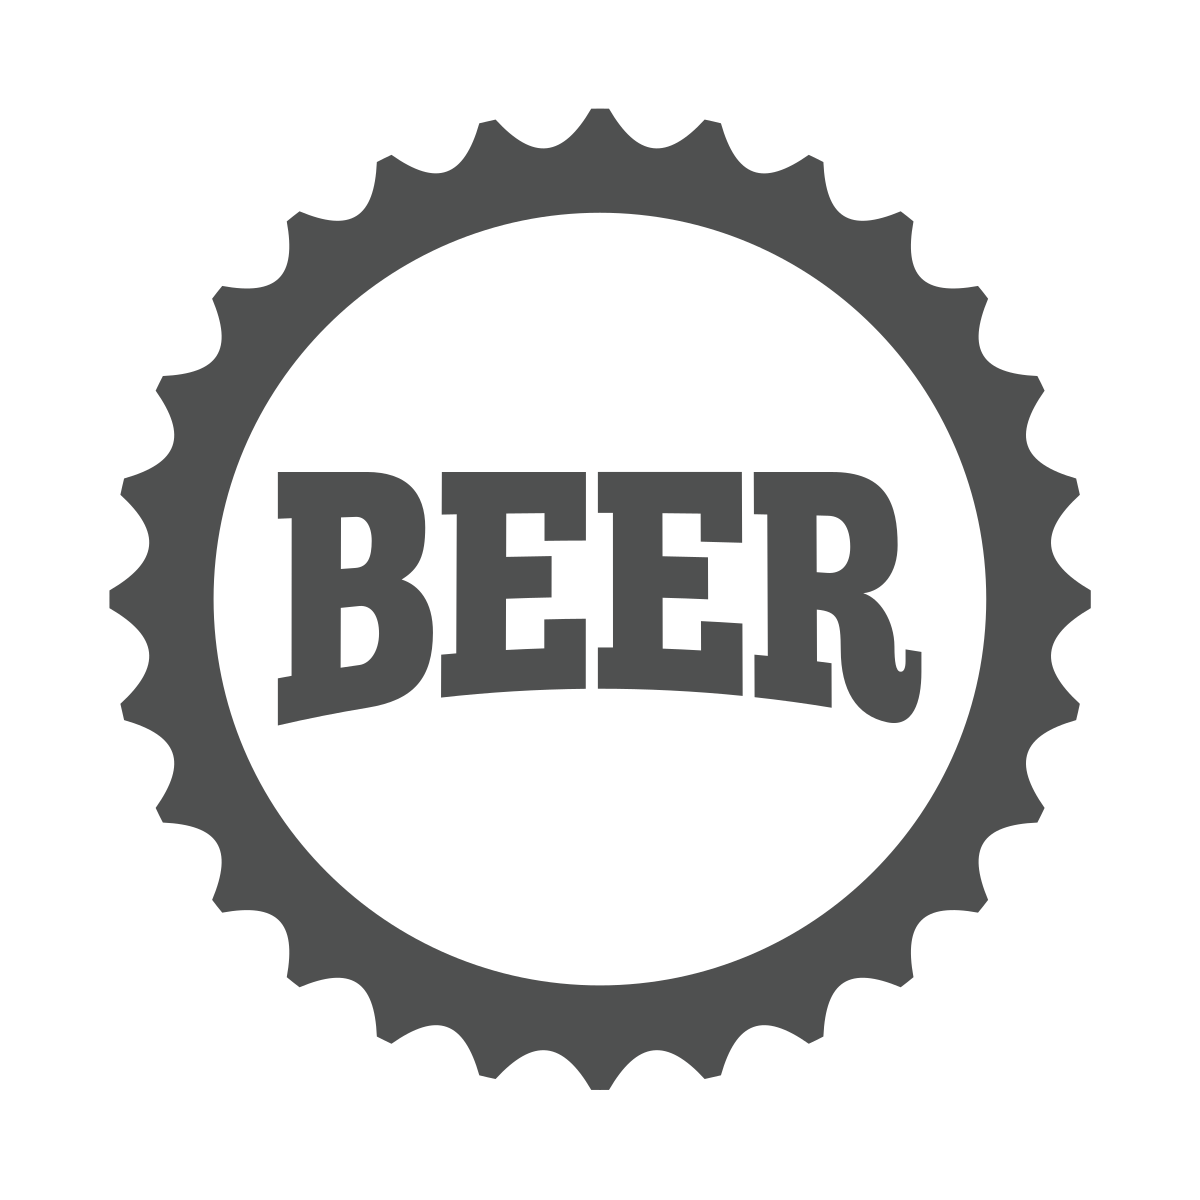 Download File:Antu drink-beer.svg - Wikimedia Commons